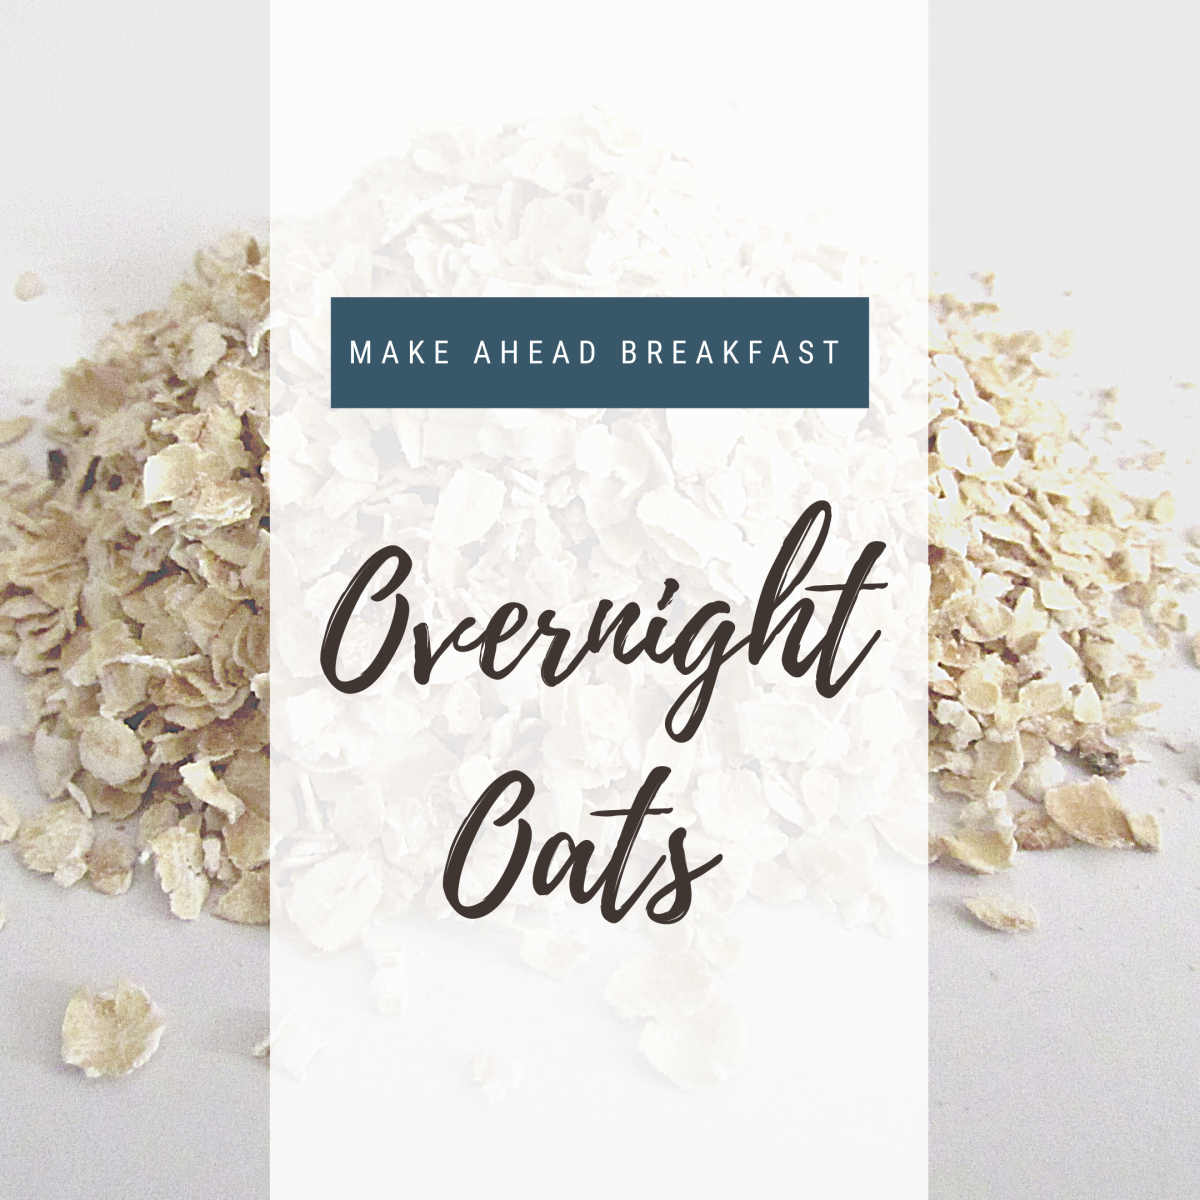 Make Ahead Breakfast: Overnight Oats